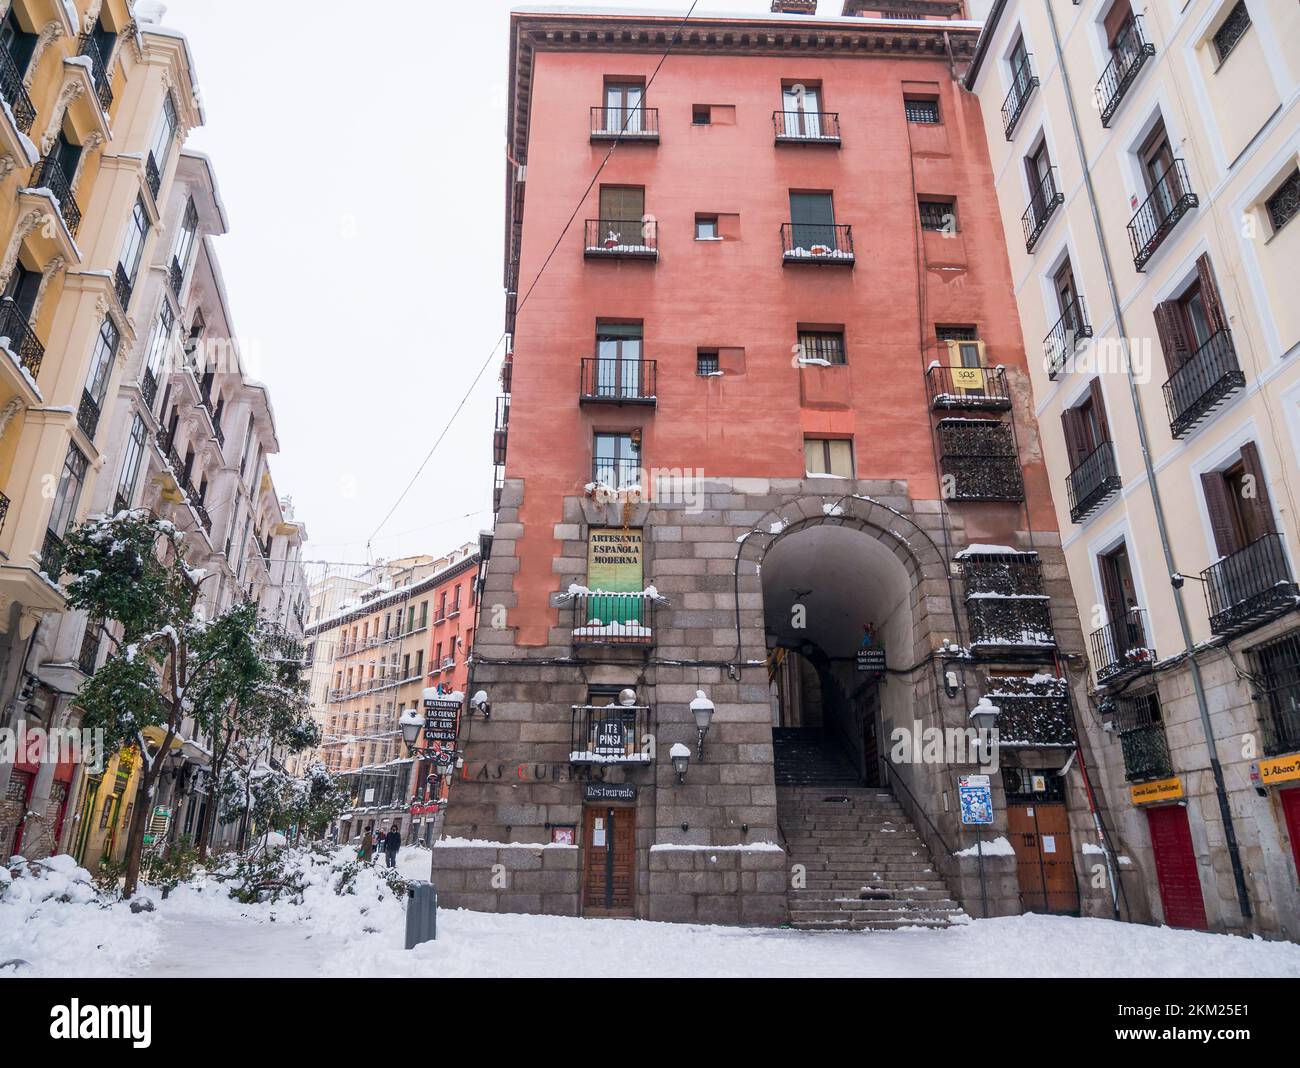 Arco de Cuchilleros nevado. Madrid. Espagne Banque D'Images